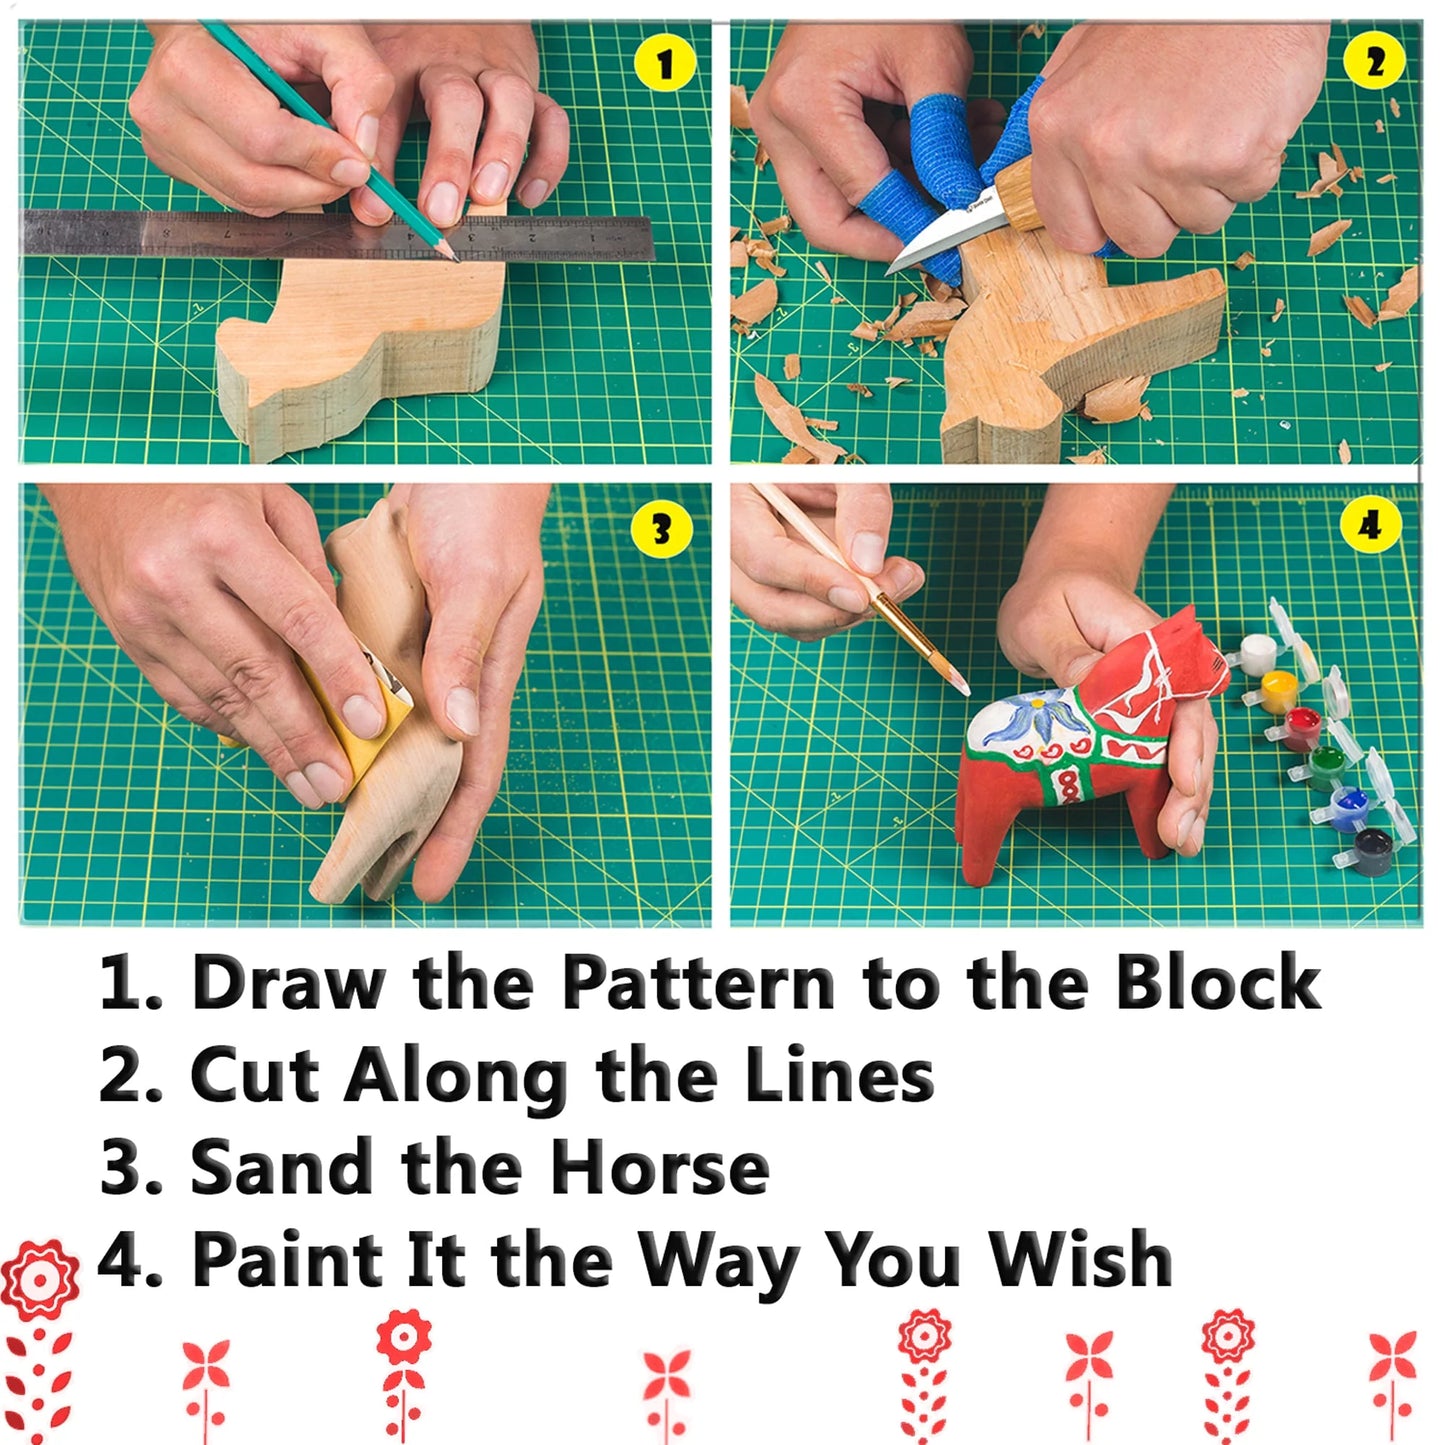 BeaverCraft DIY02 Dala Horse Carving Kit Complete Starter Whittling Kit for Beginners Adults Teens and Kids